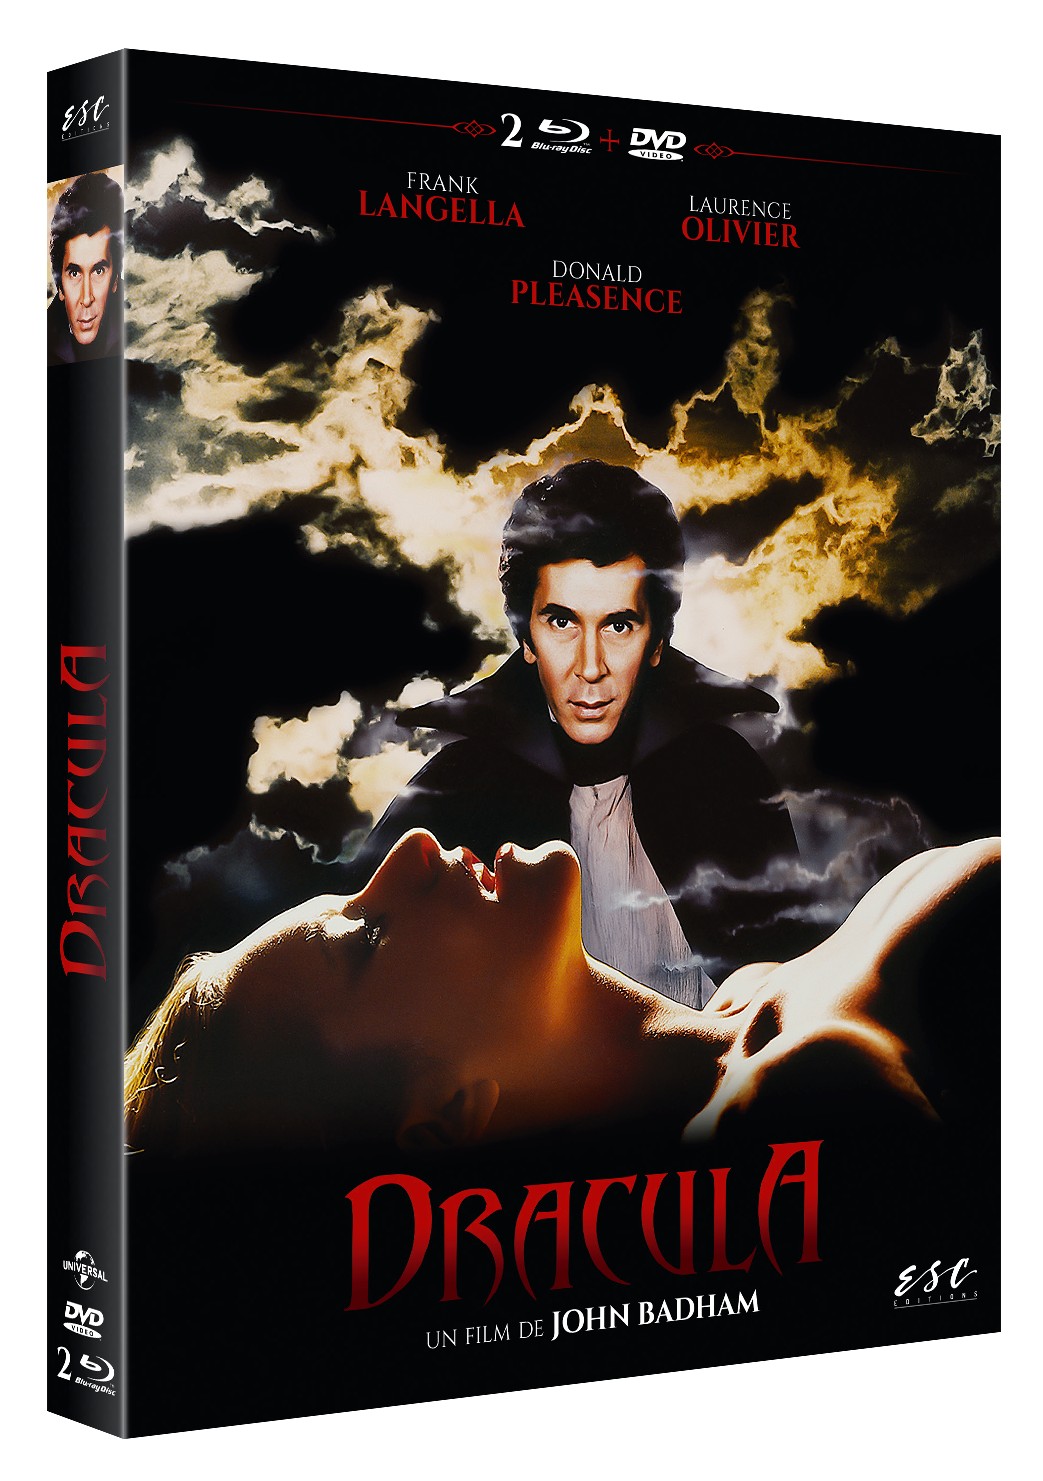 DRACULA - DVD + BLU-RAY